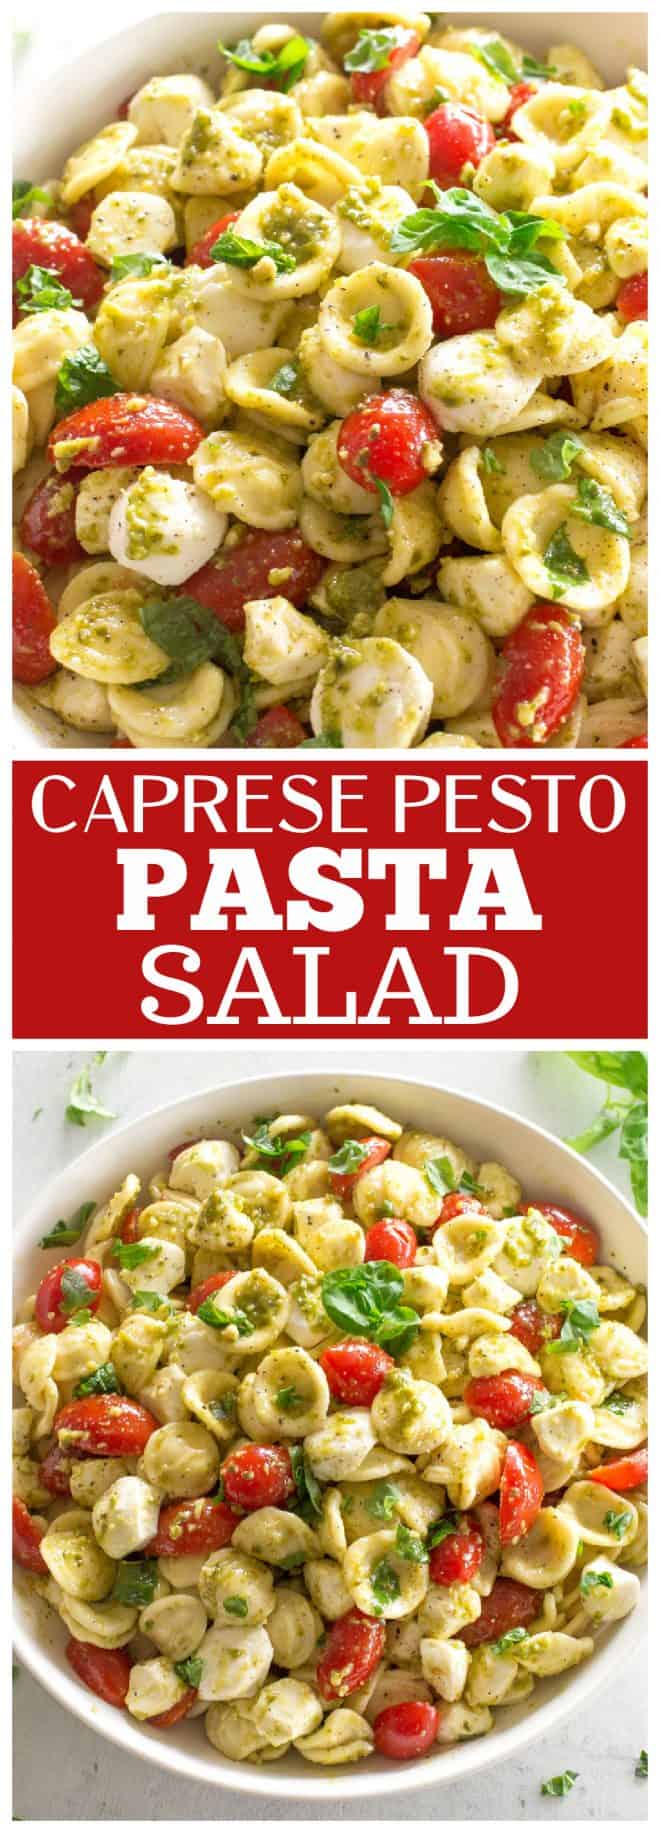 Caprese Pesto Pasta Salad